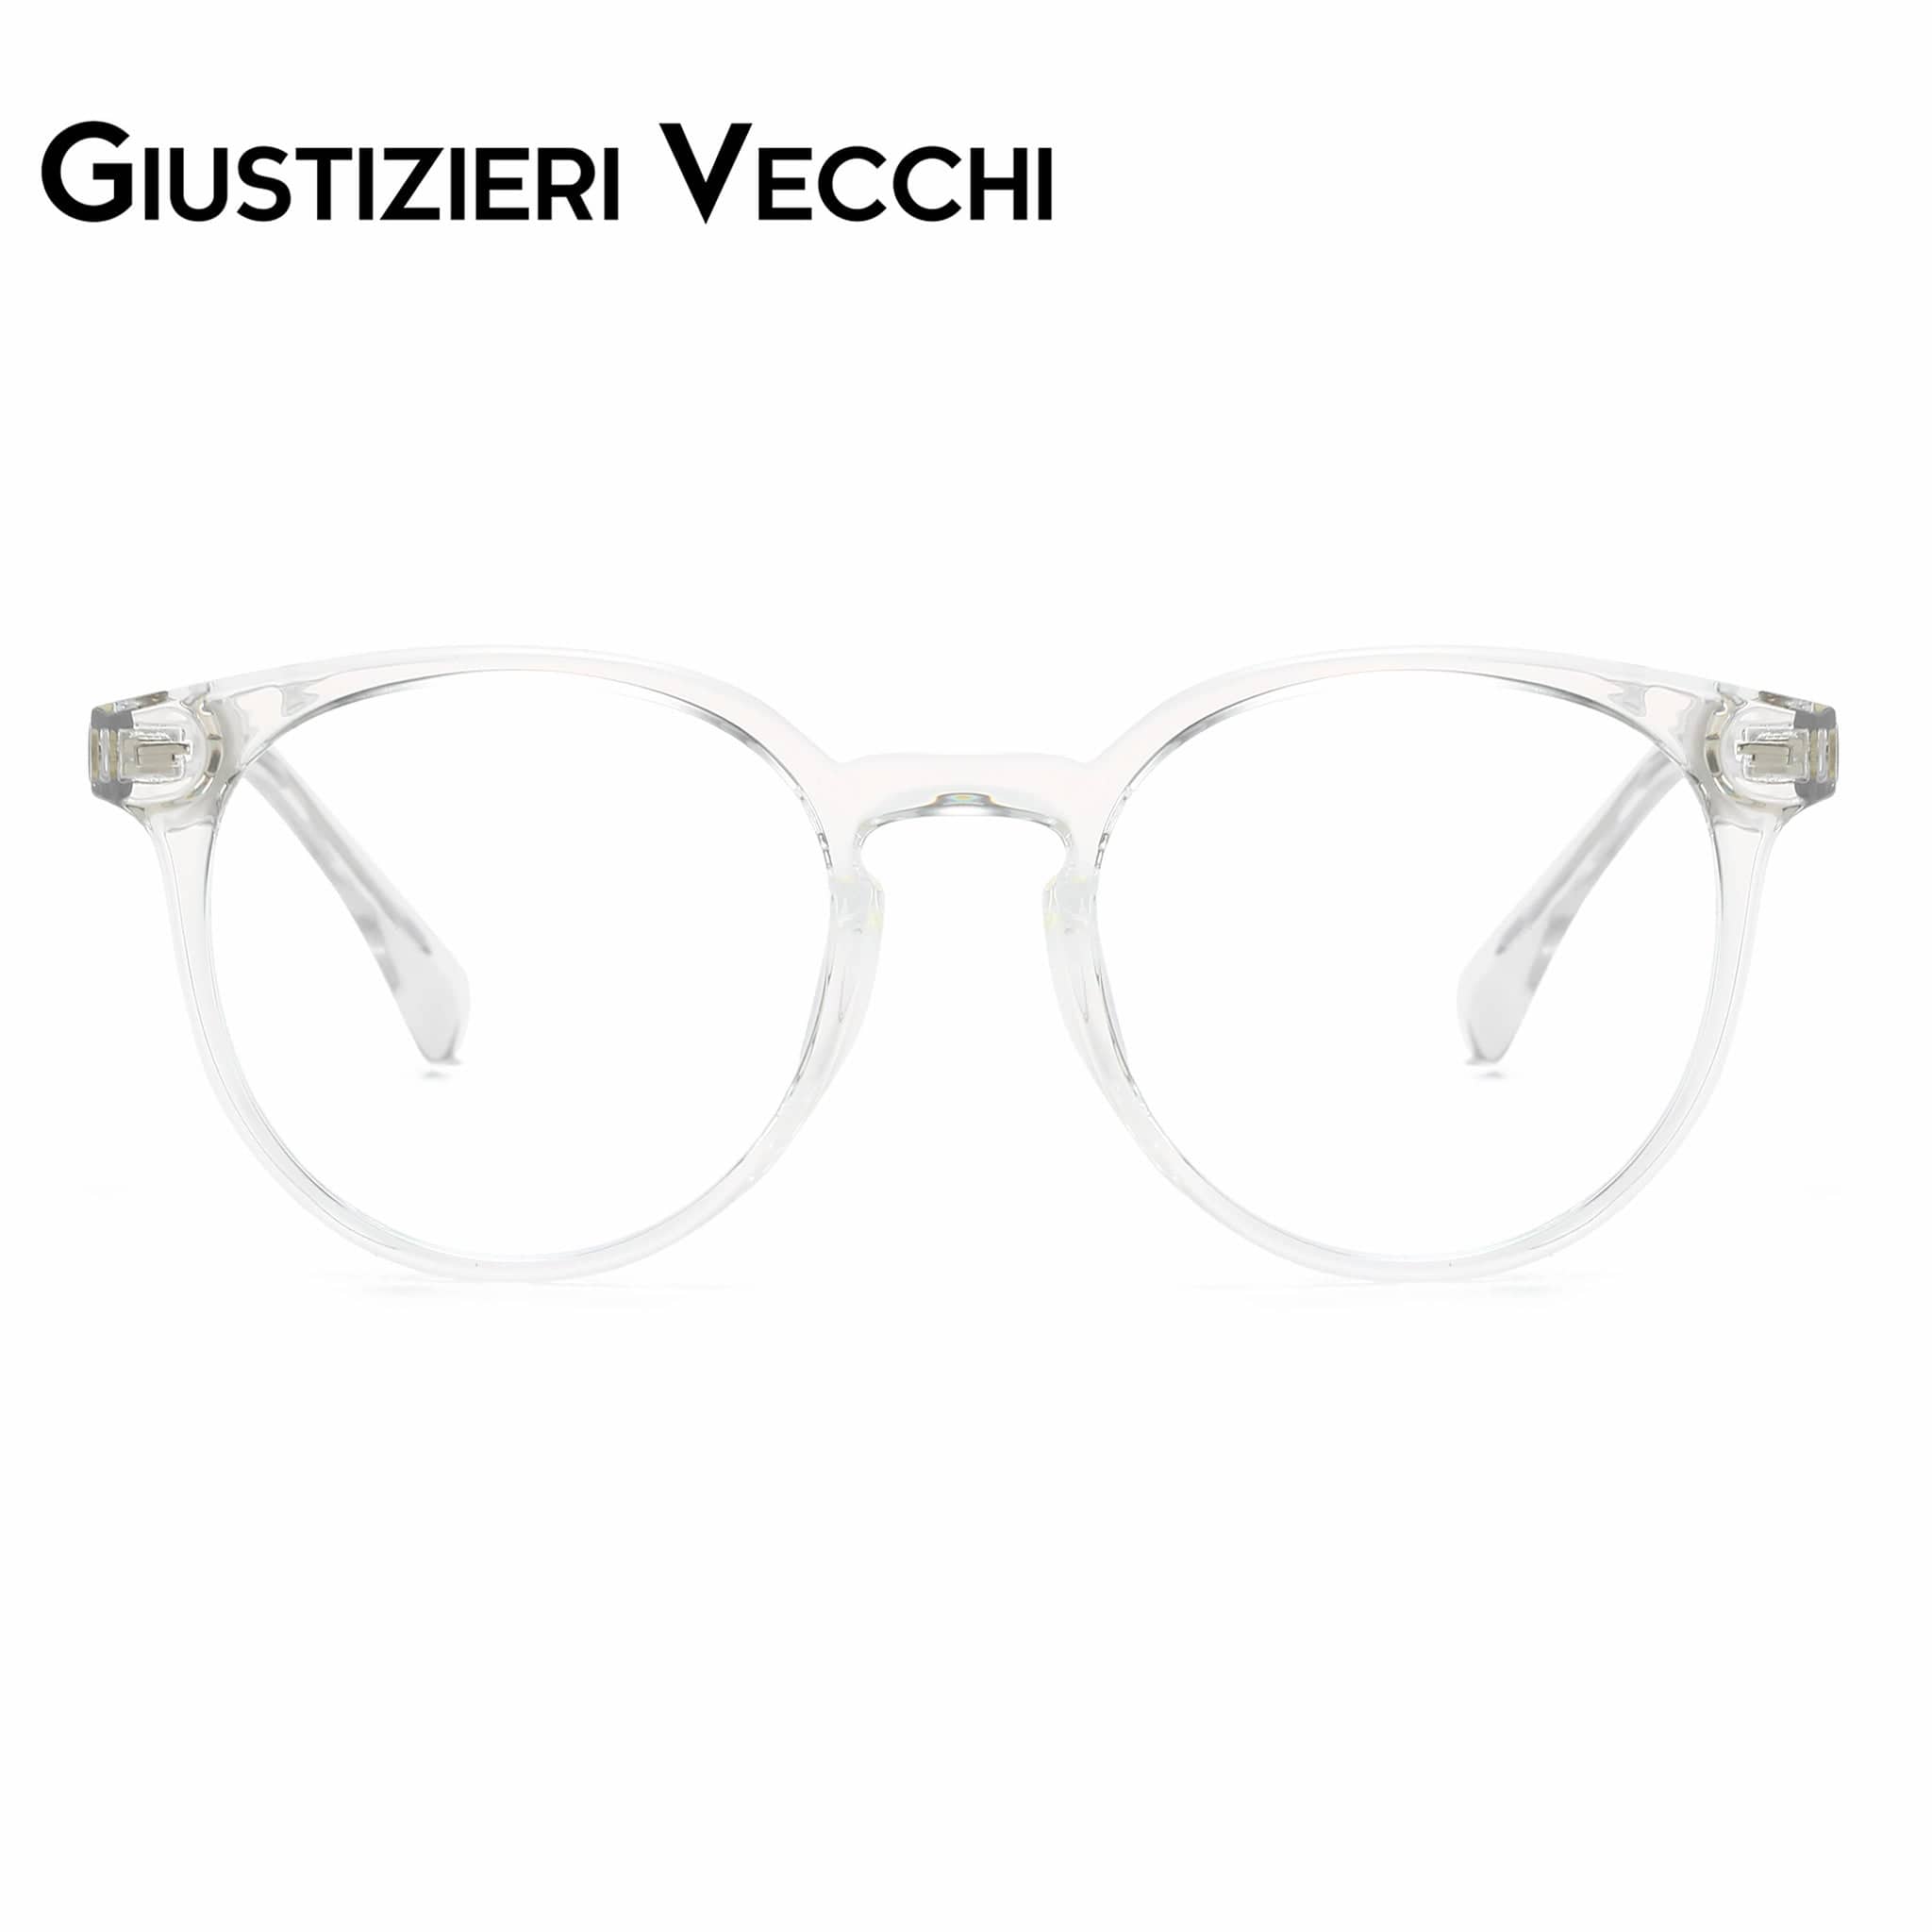 GIUSTIZIERI VECCHI Eyeglasses Small / Clear Crystal NeonBloom Duo